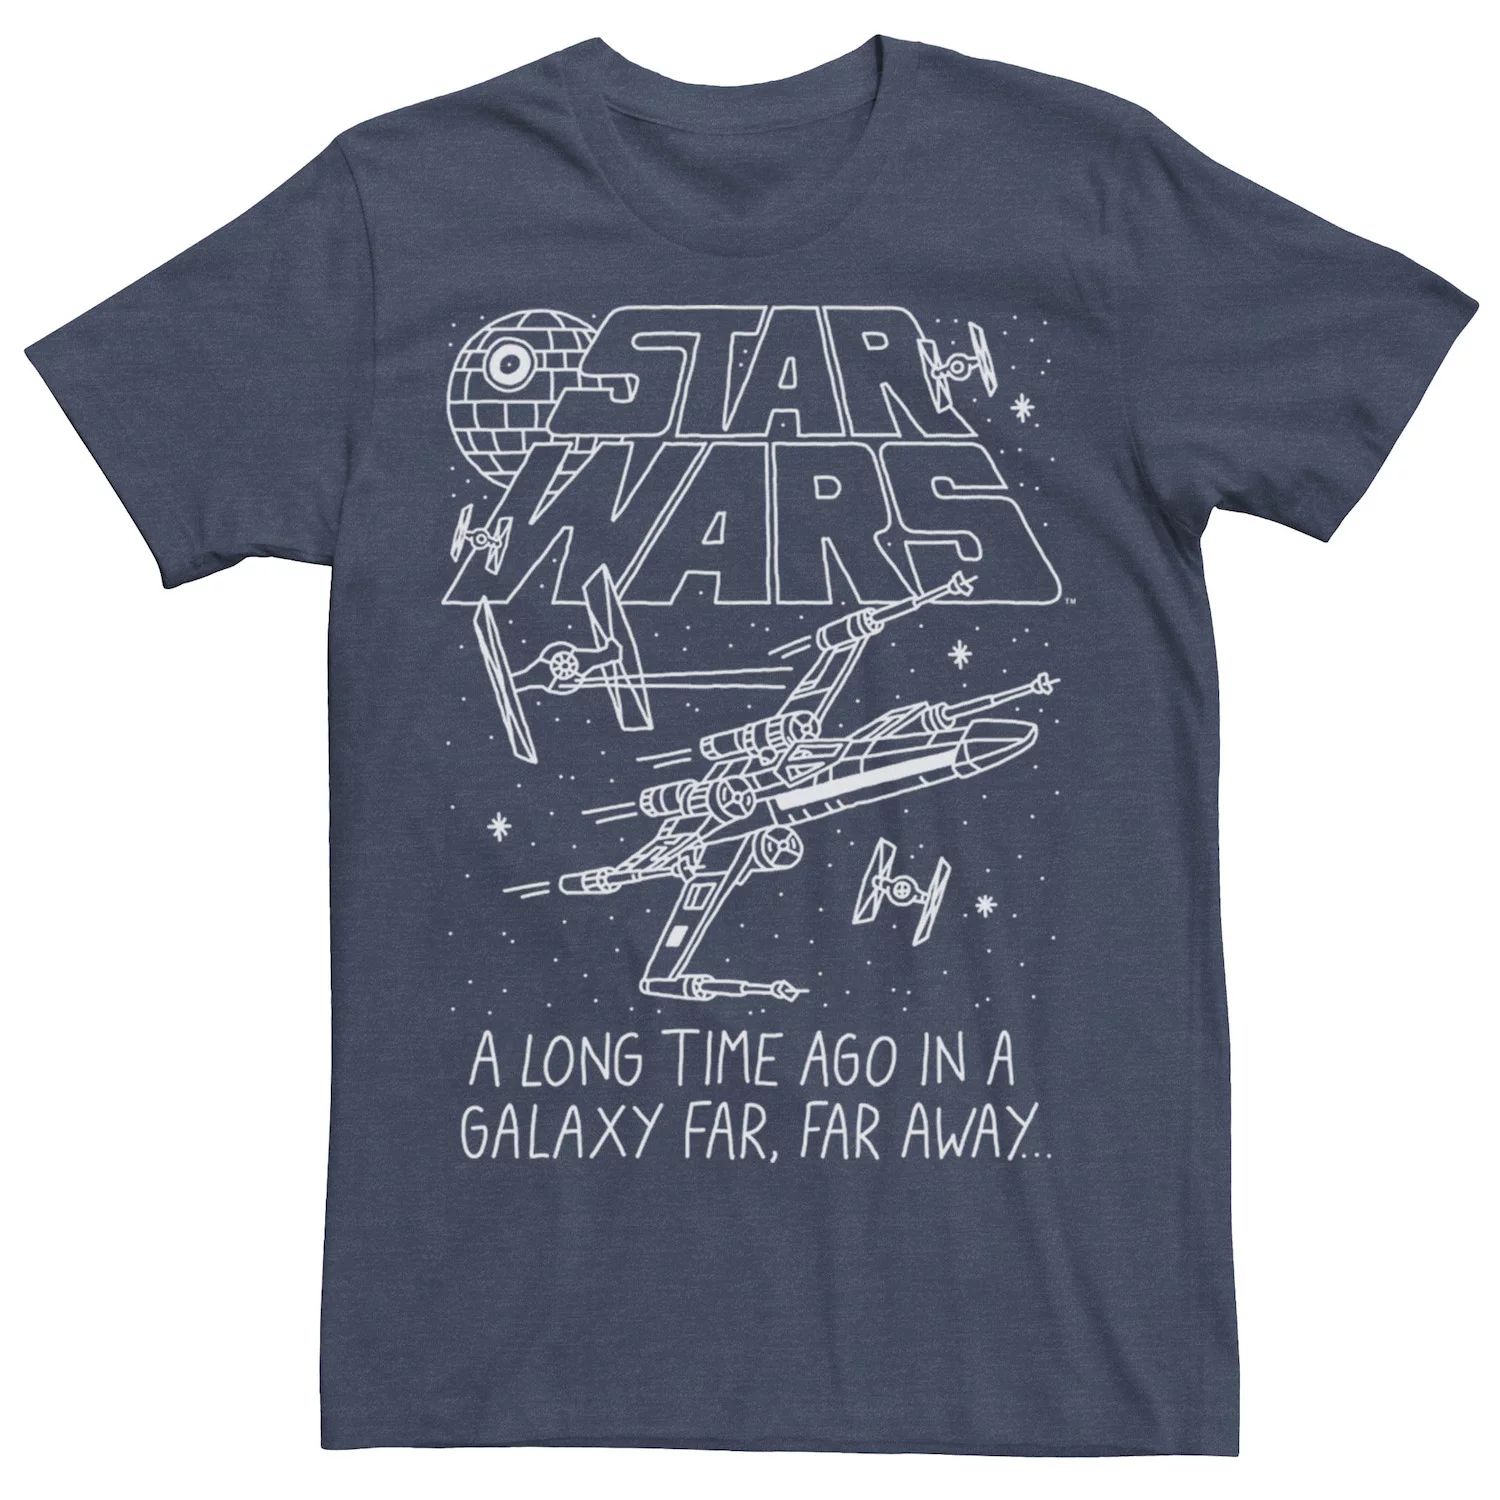 Мужская футболка с рисунком «Далеко-далеко» Star Wars доля с далеко далеко